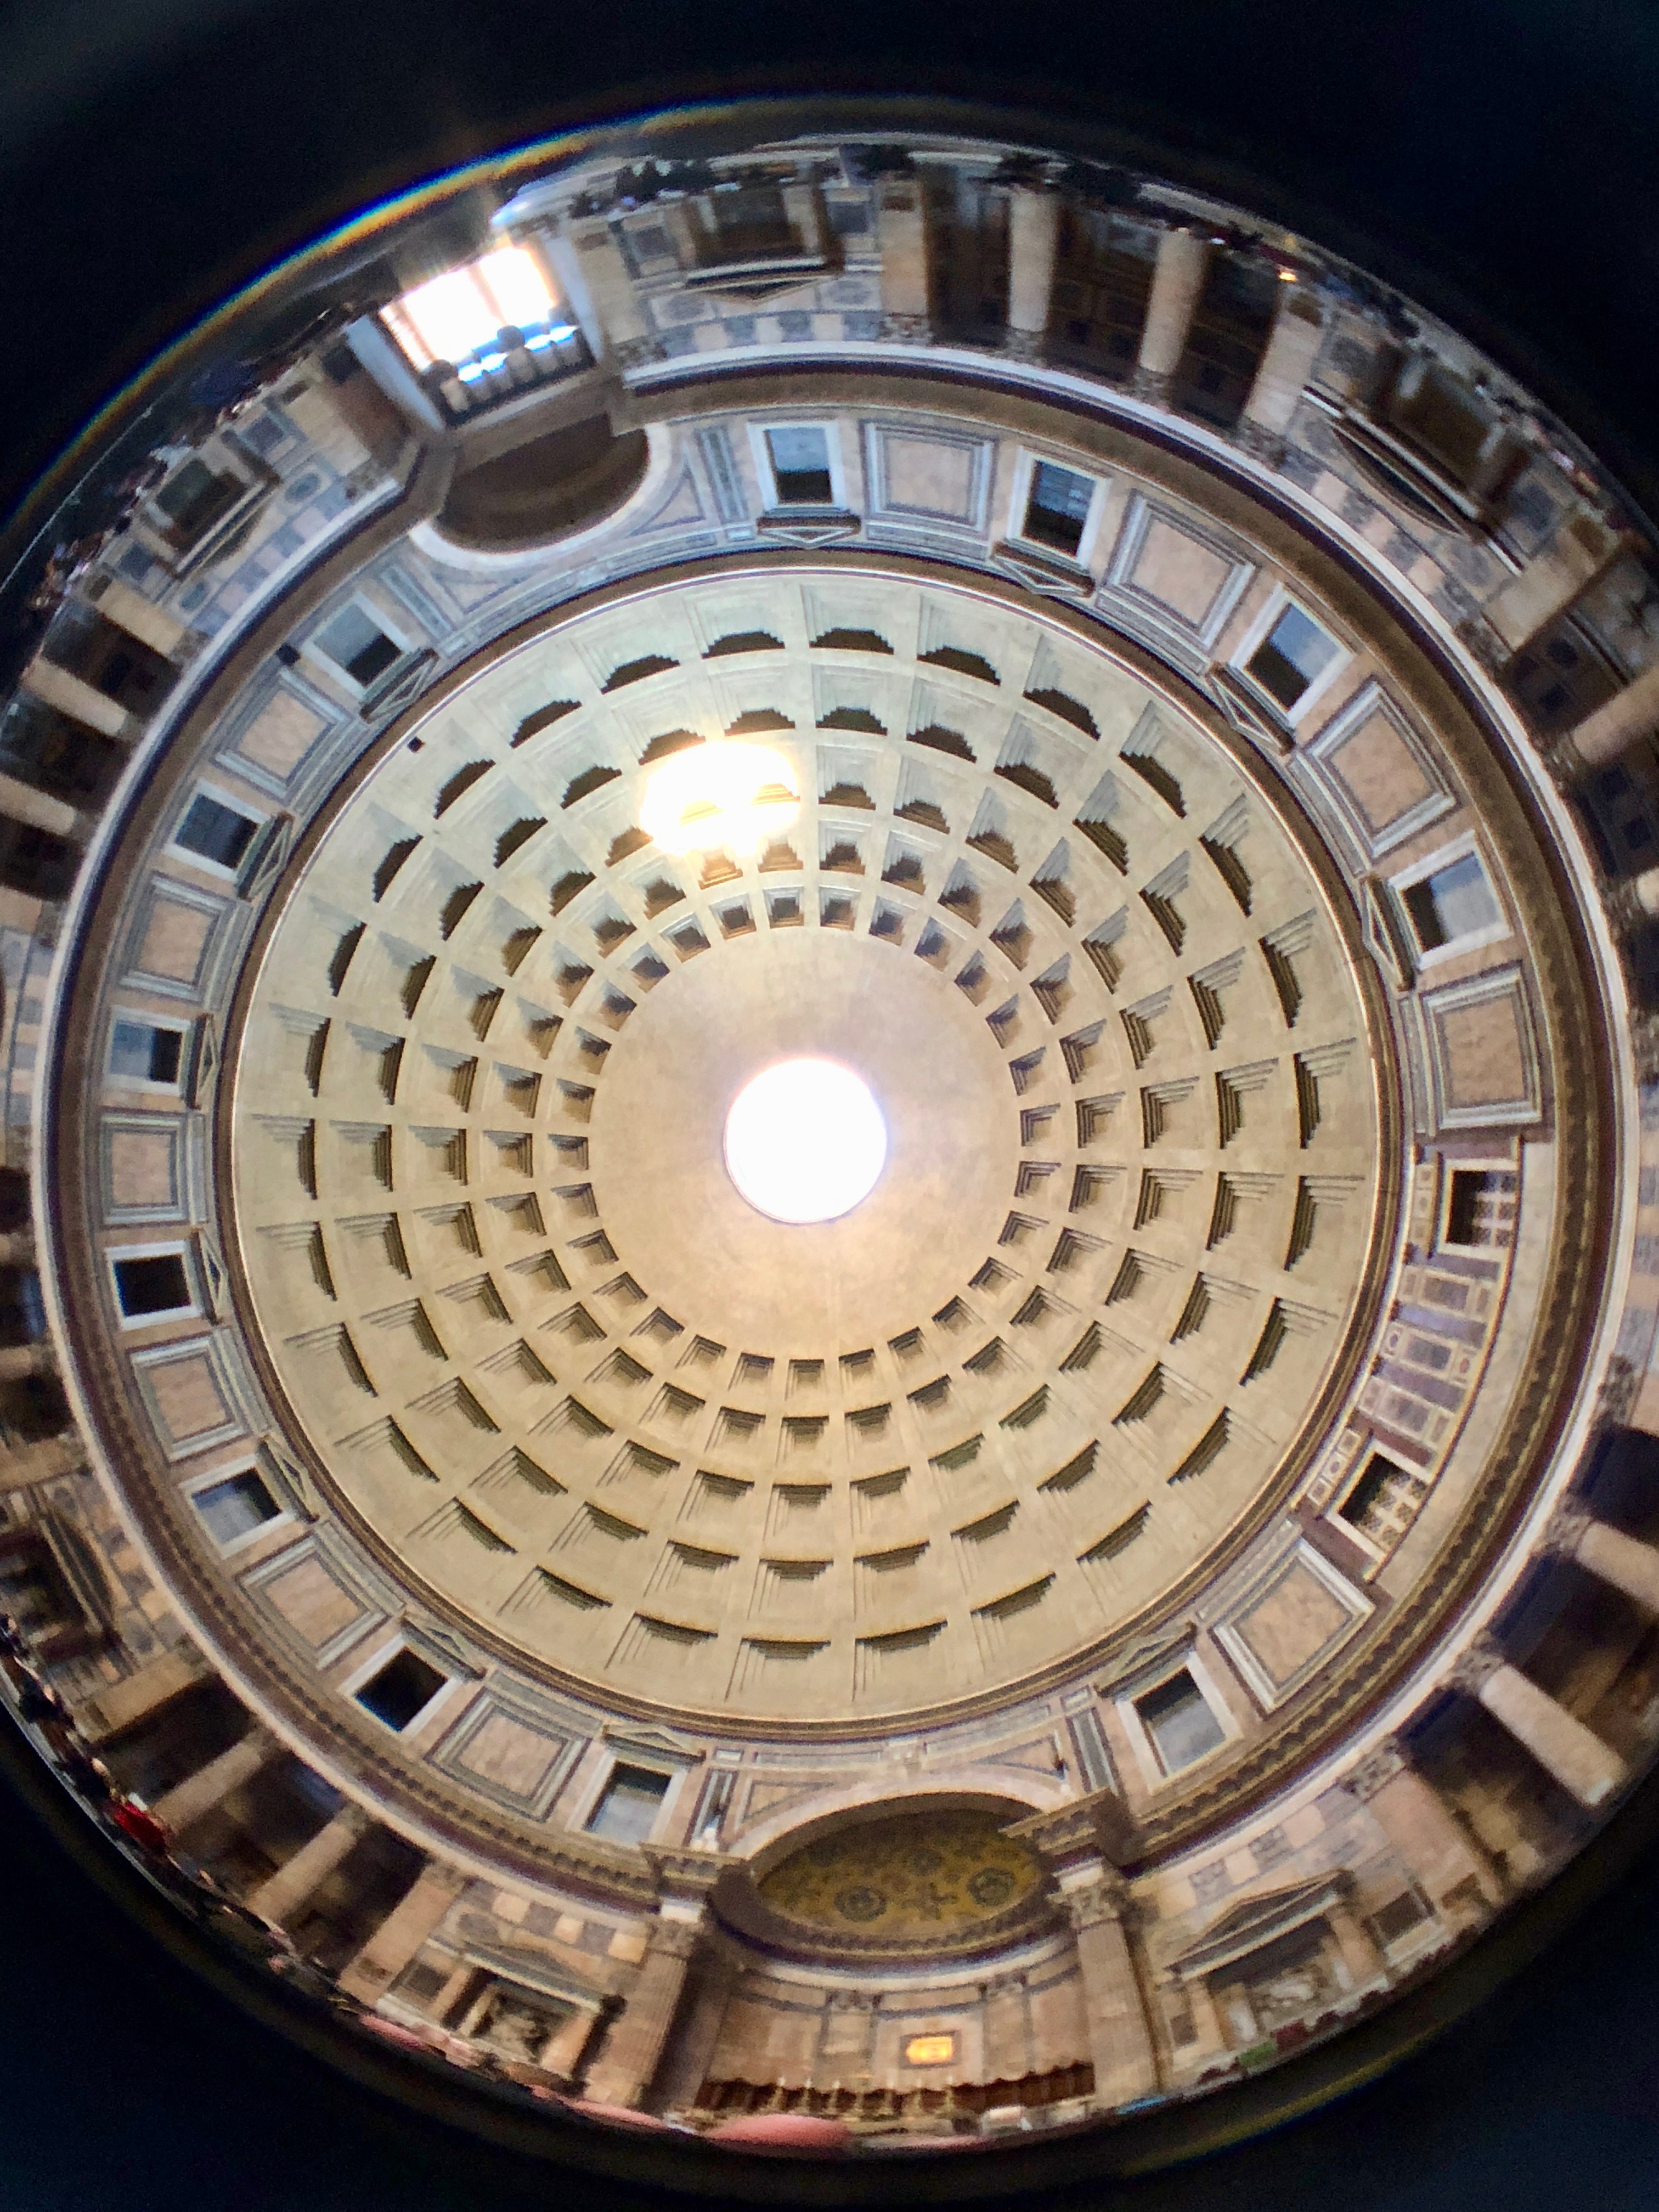 File:Oculus, Dome, Pantheon (46505085211).jpg - Wikipedia